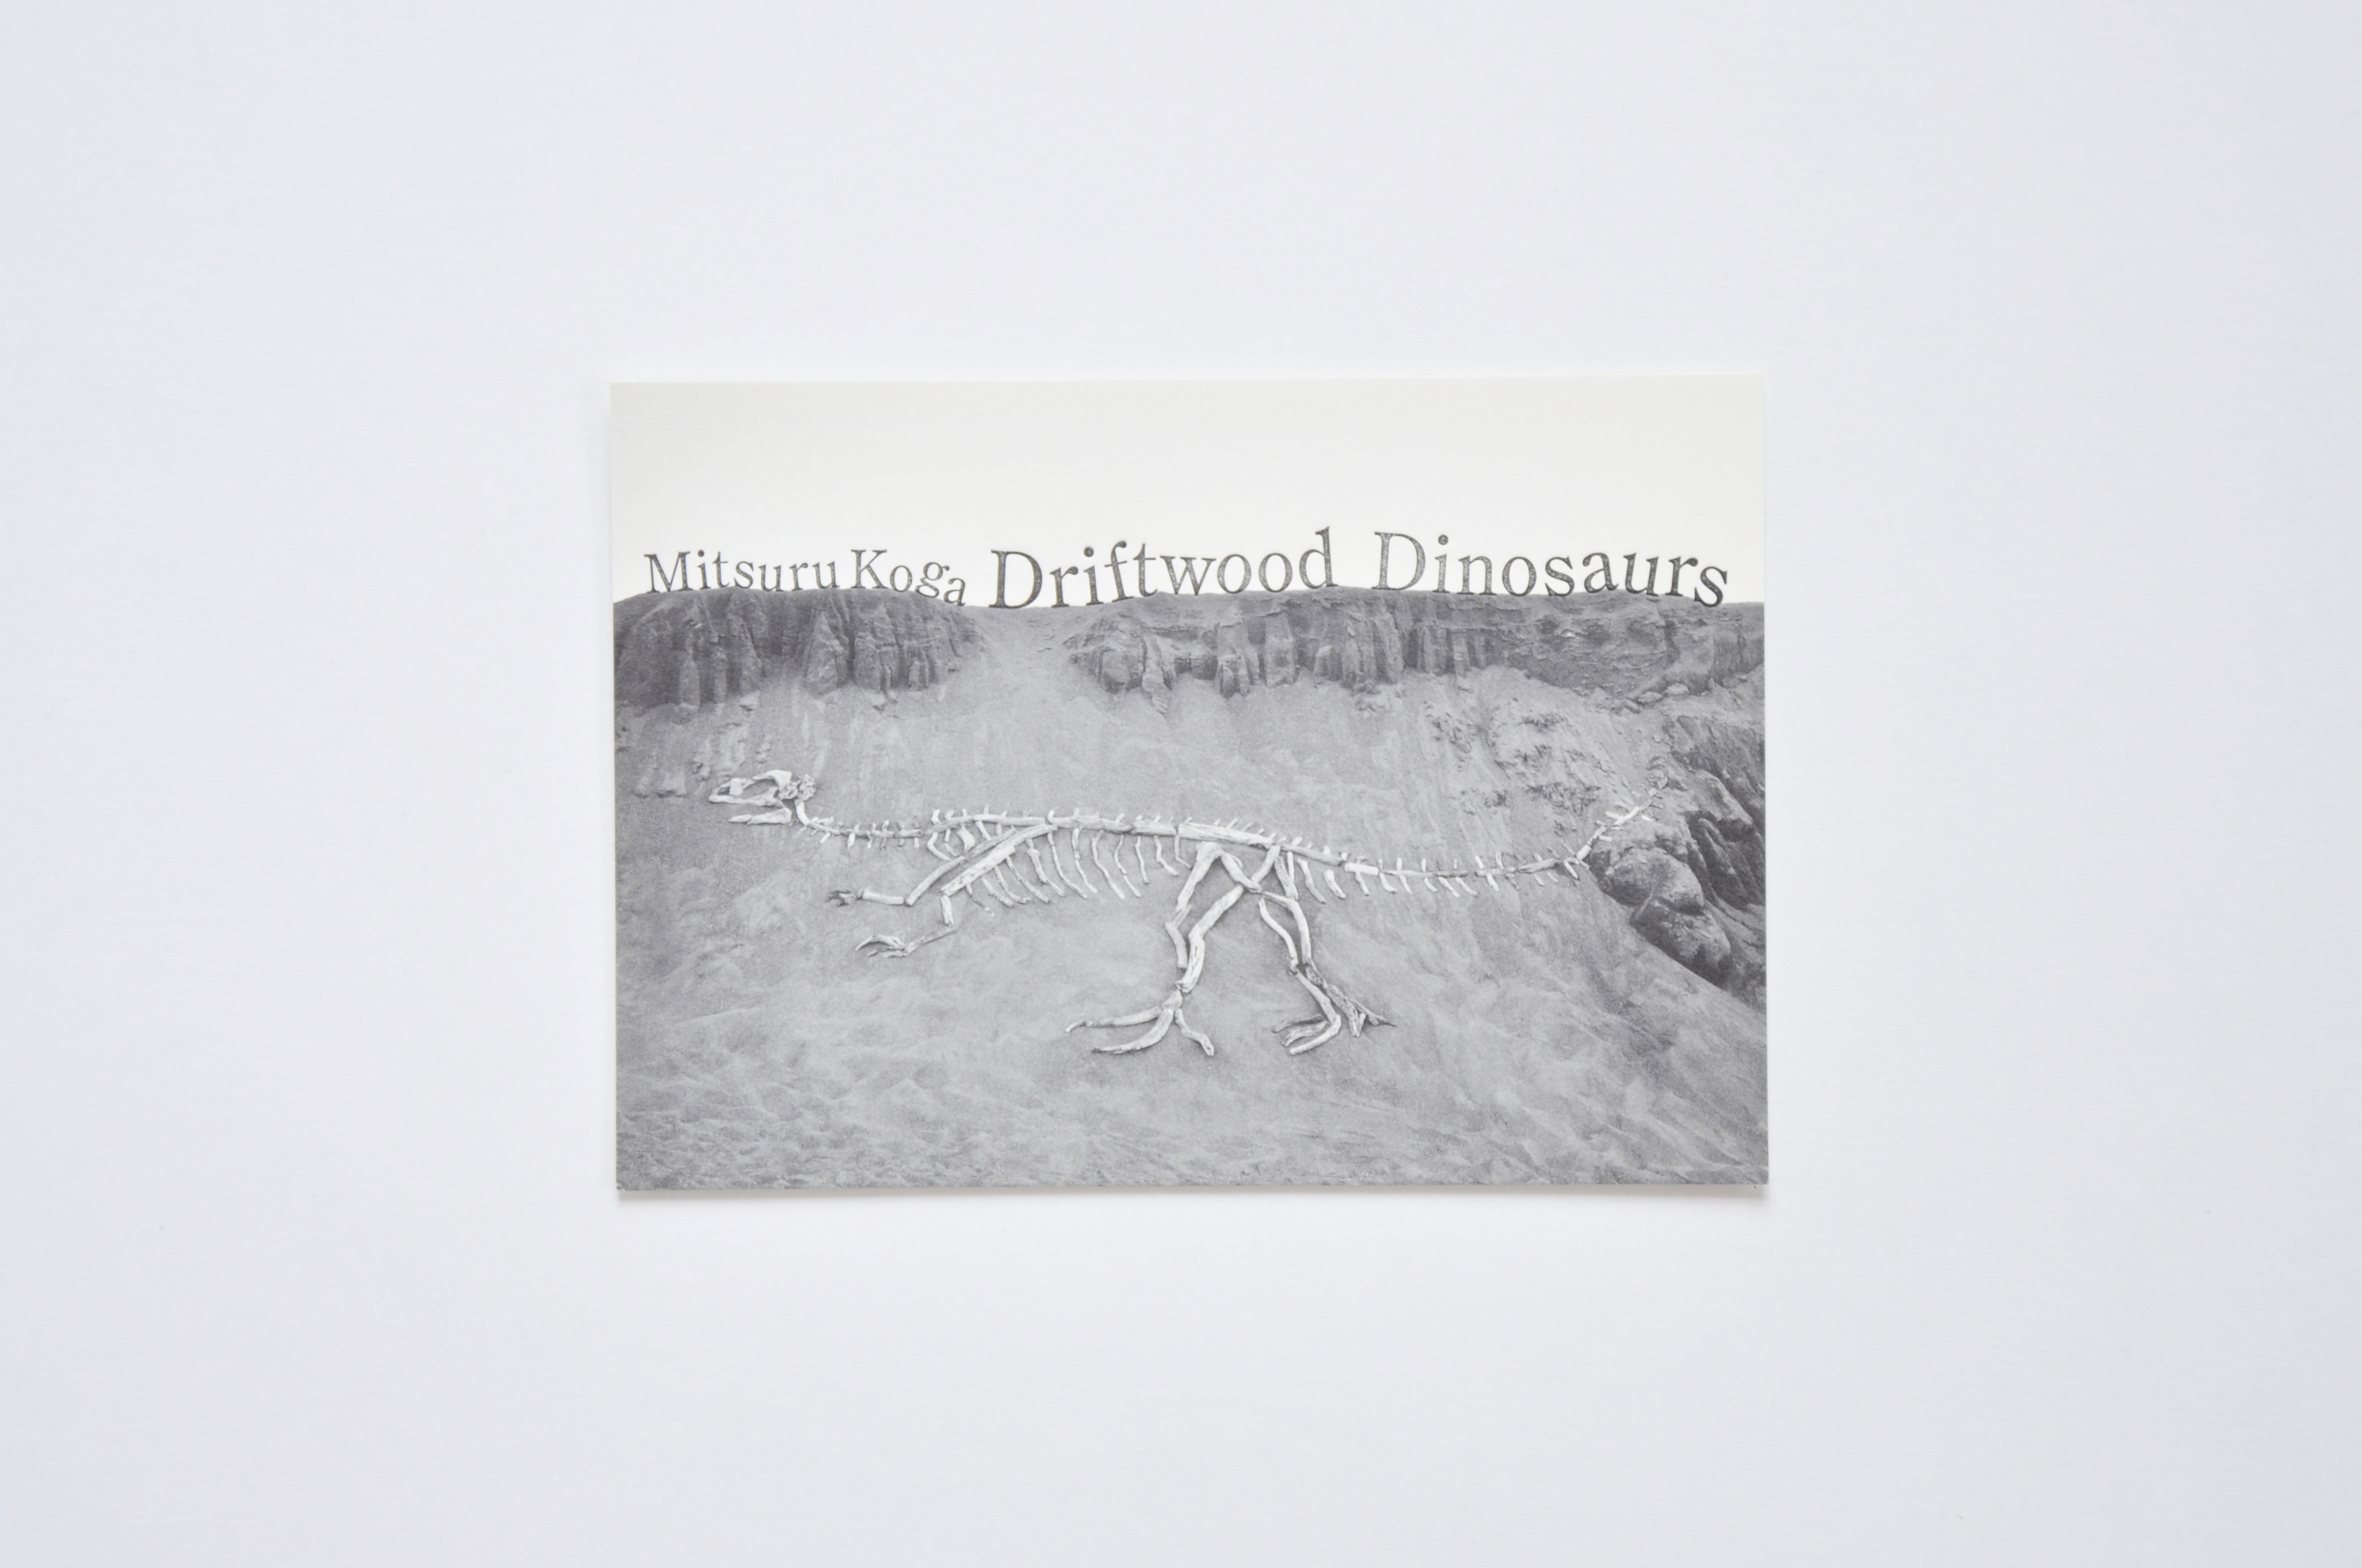 Driftwood Dinosaurs Exhibition